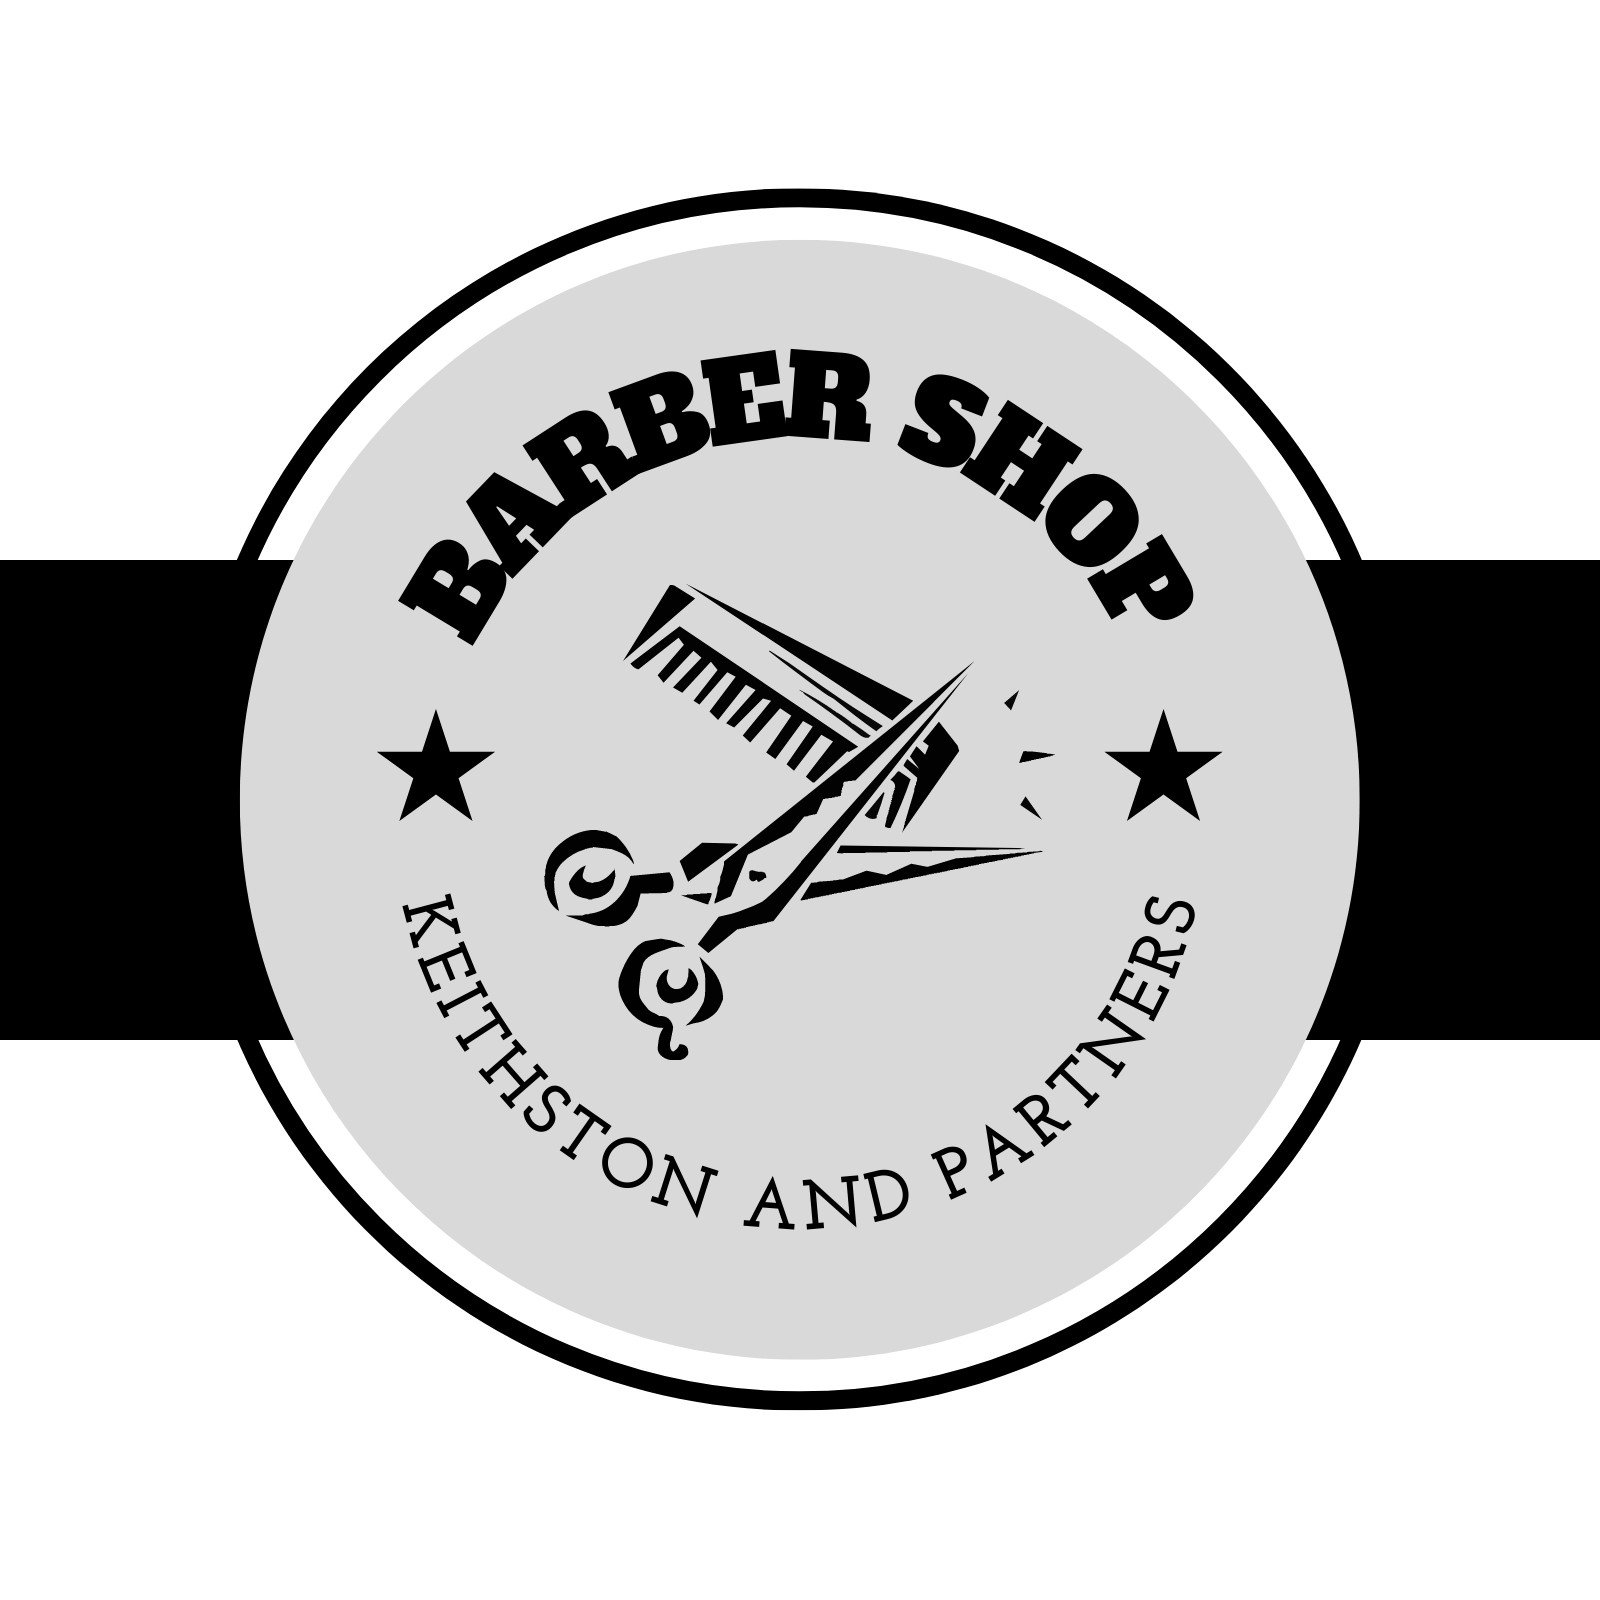 barber shop logo template